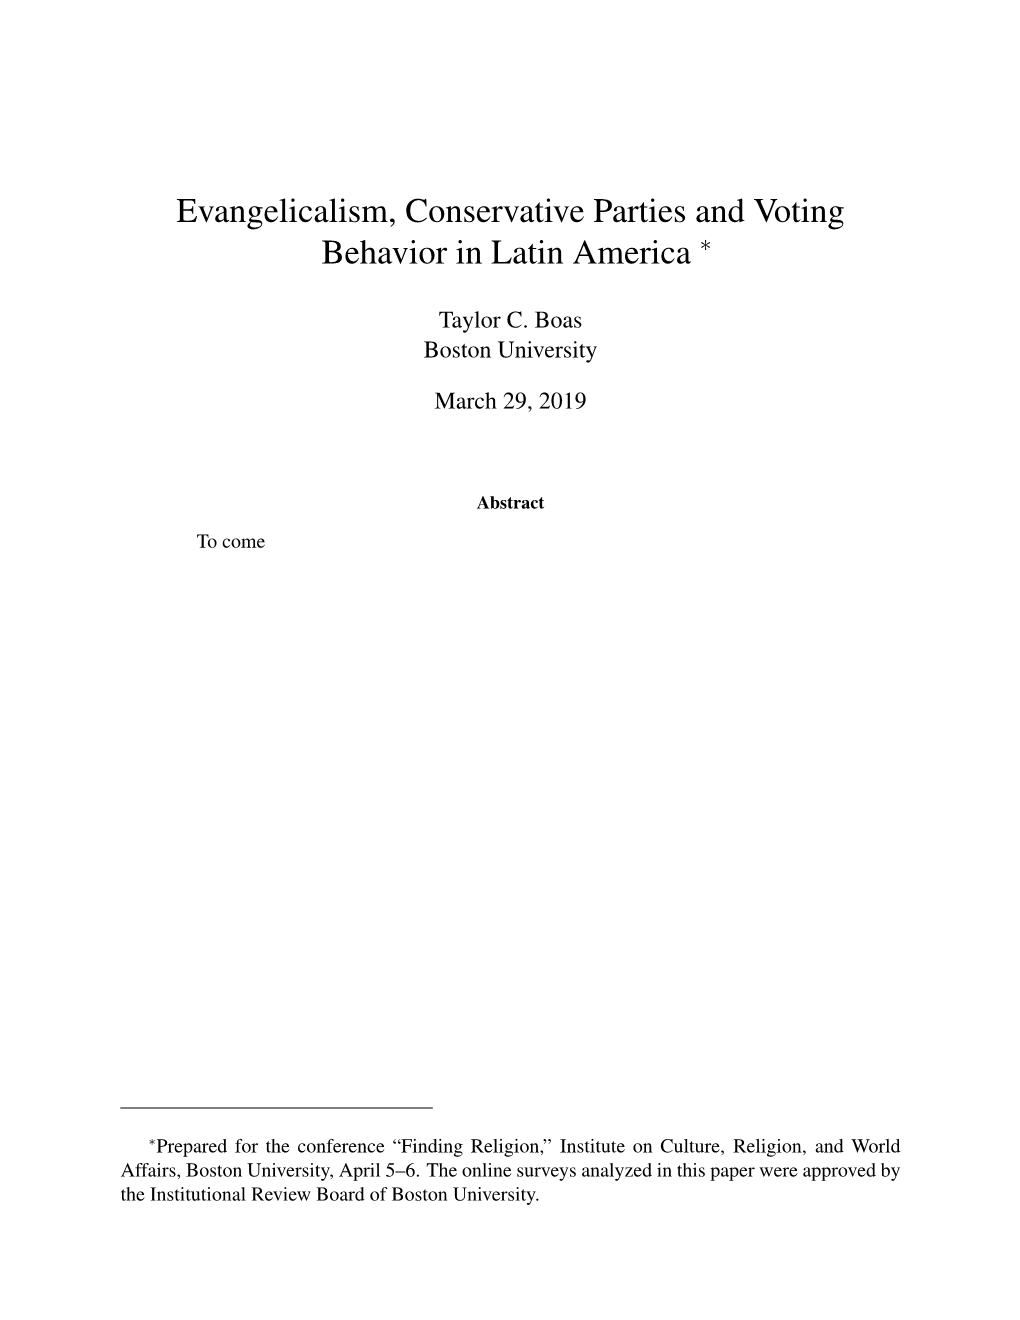 Evangelicalism, Conservative Parties and Voting Behavior in Latin America ∗